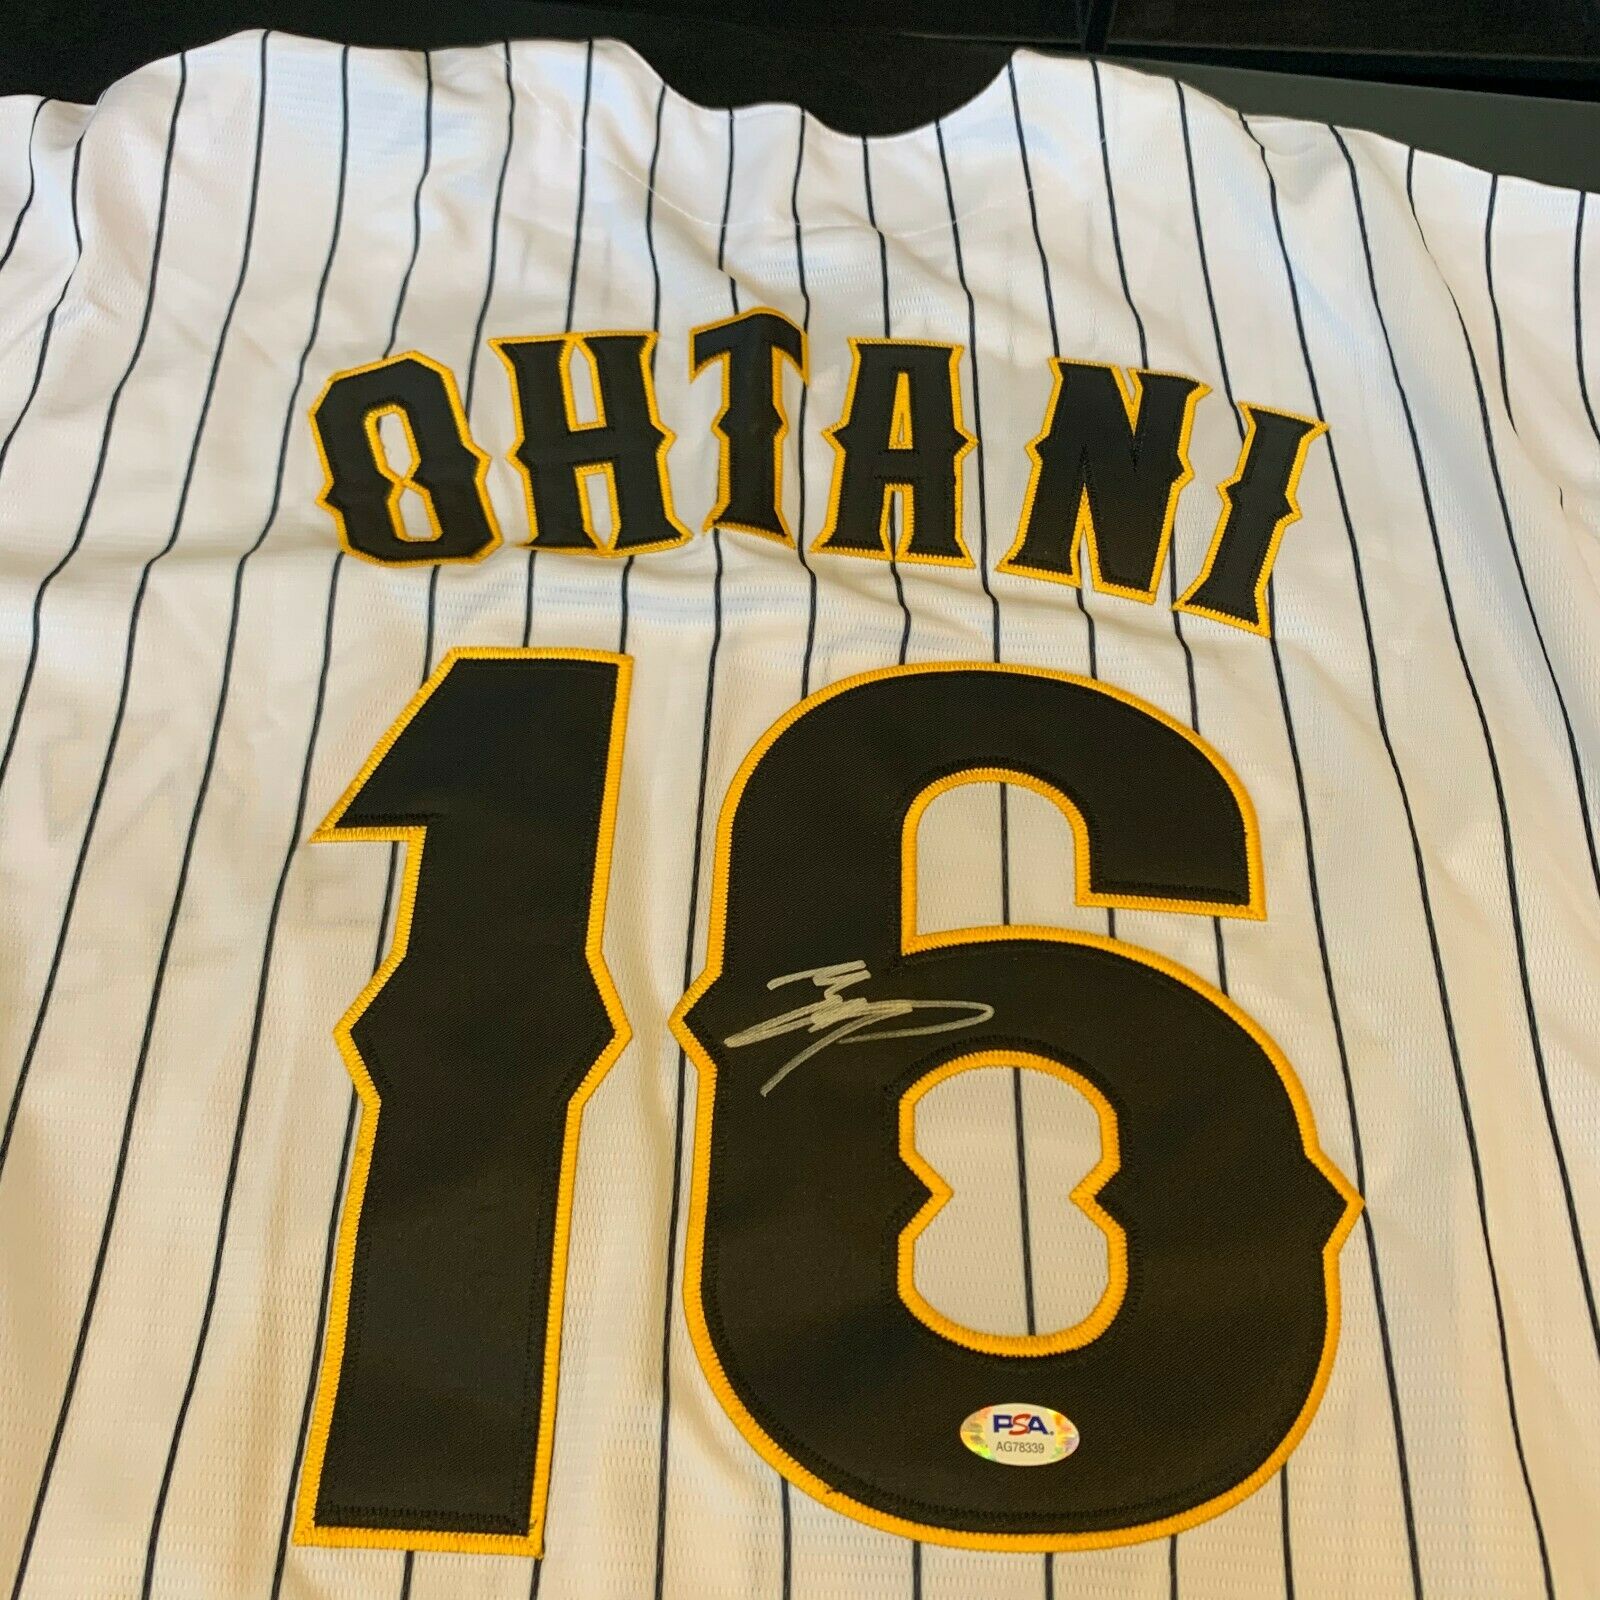 Angels MVP Shohei Ohtani Signed / Autographed Kanji Baseball Jersey - MLB  COA